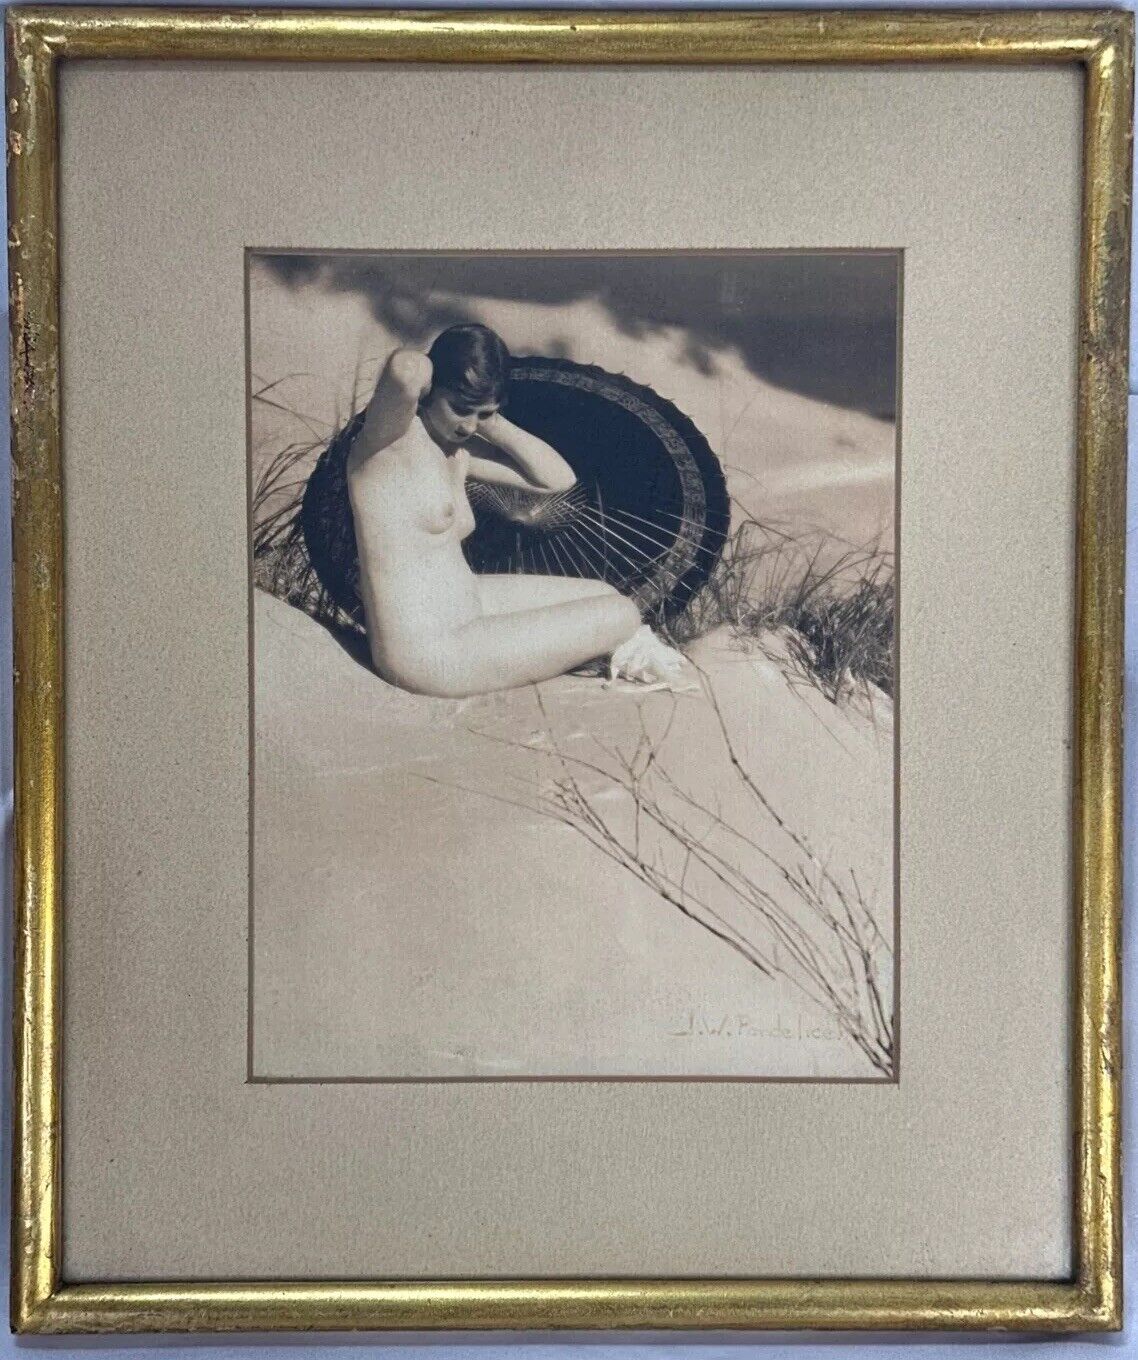 J.W. PONDELICEK Signed Girl with Umbrella Circa 1920s Framed Sepia Photo Pinup